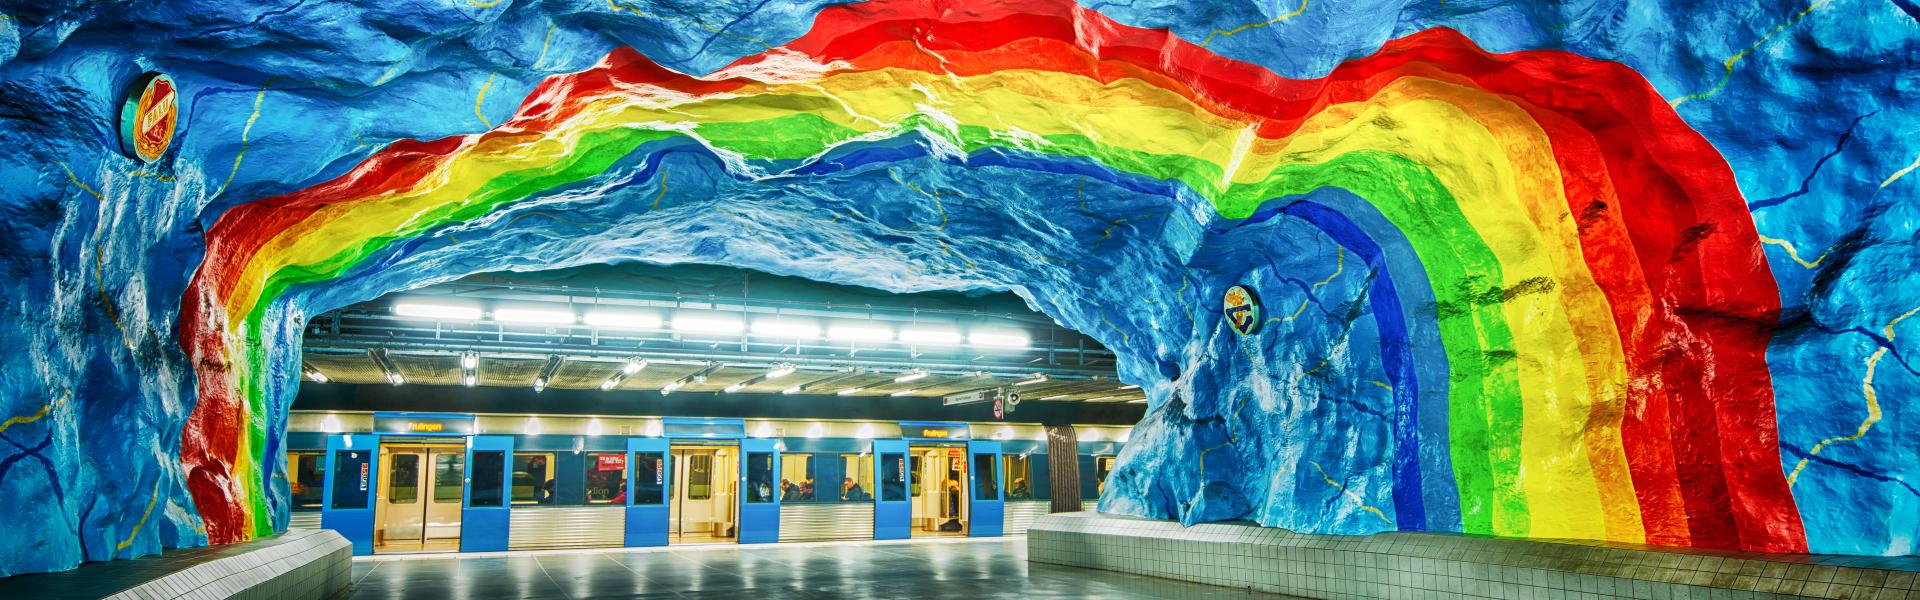 The interior design of Stadium Metro Station  in Stockholm, Sweden, November, 2013.